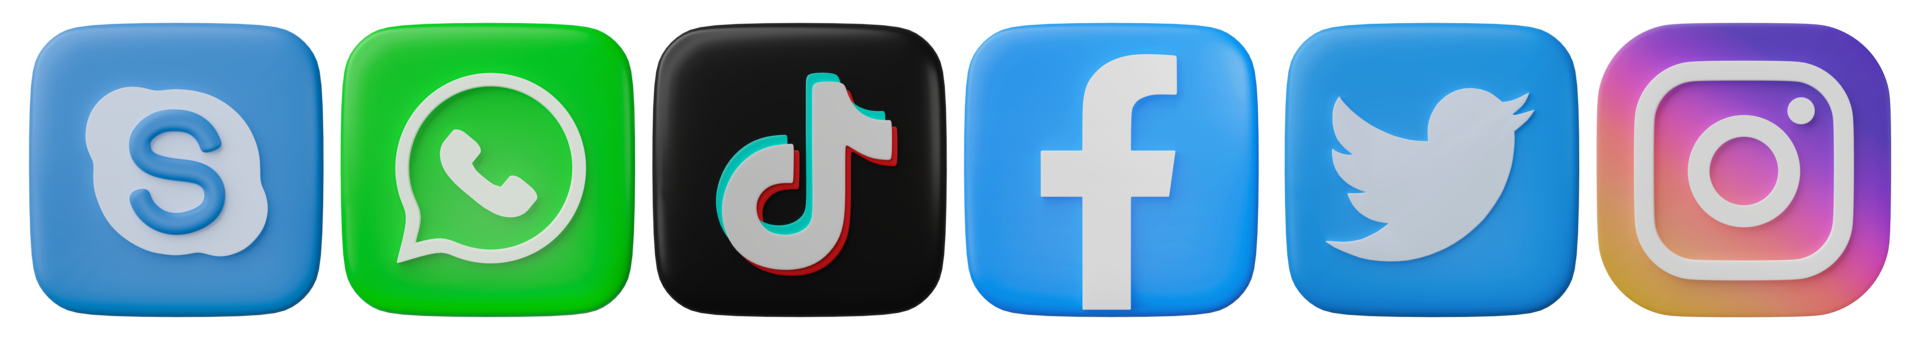 Social media icons on transparent background. Instagram, Facebook, Skype, Twitter, TikTok, Whatsapp logo set. 3D editorial illustration. png